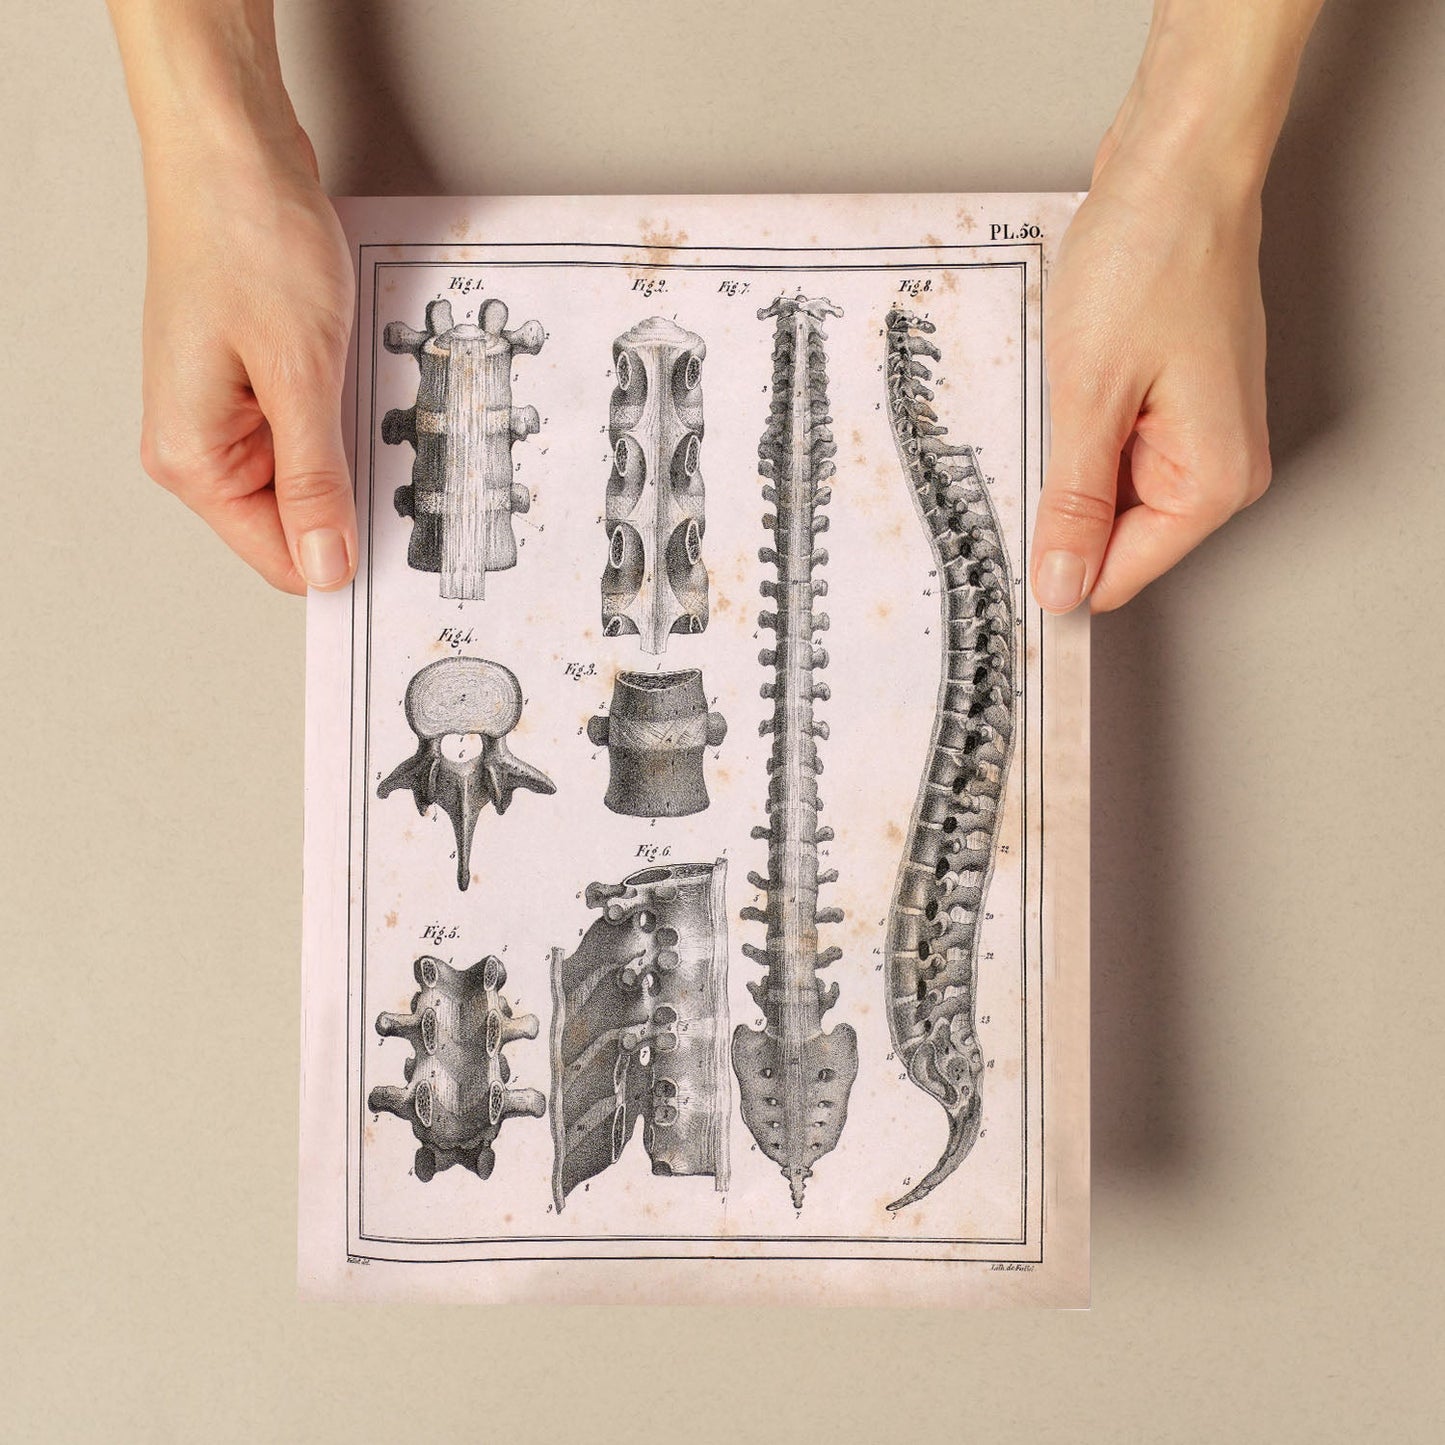 Paillou Spine; vertebrae, sacrum and coccyx with ligaments-Artwork-Nacnic-Nacnic Estudio SL